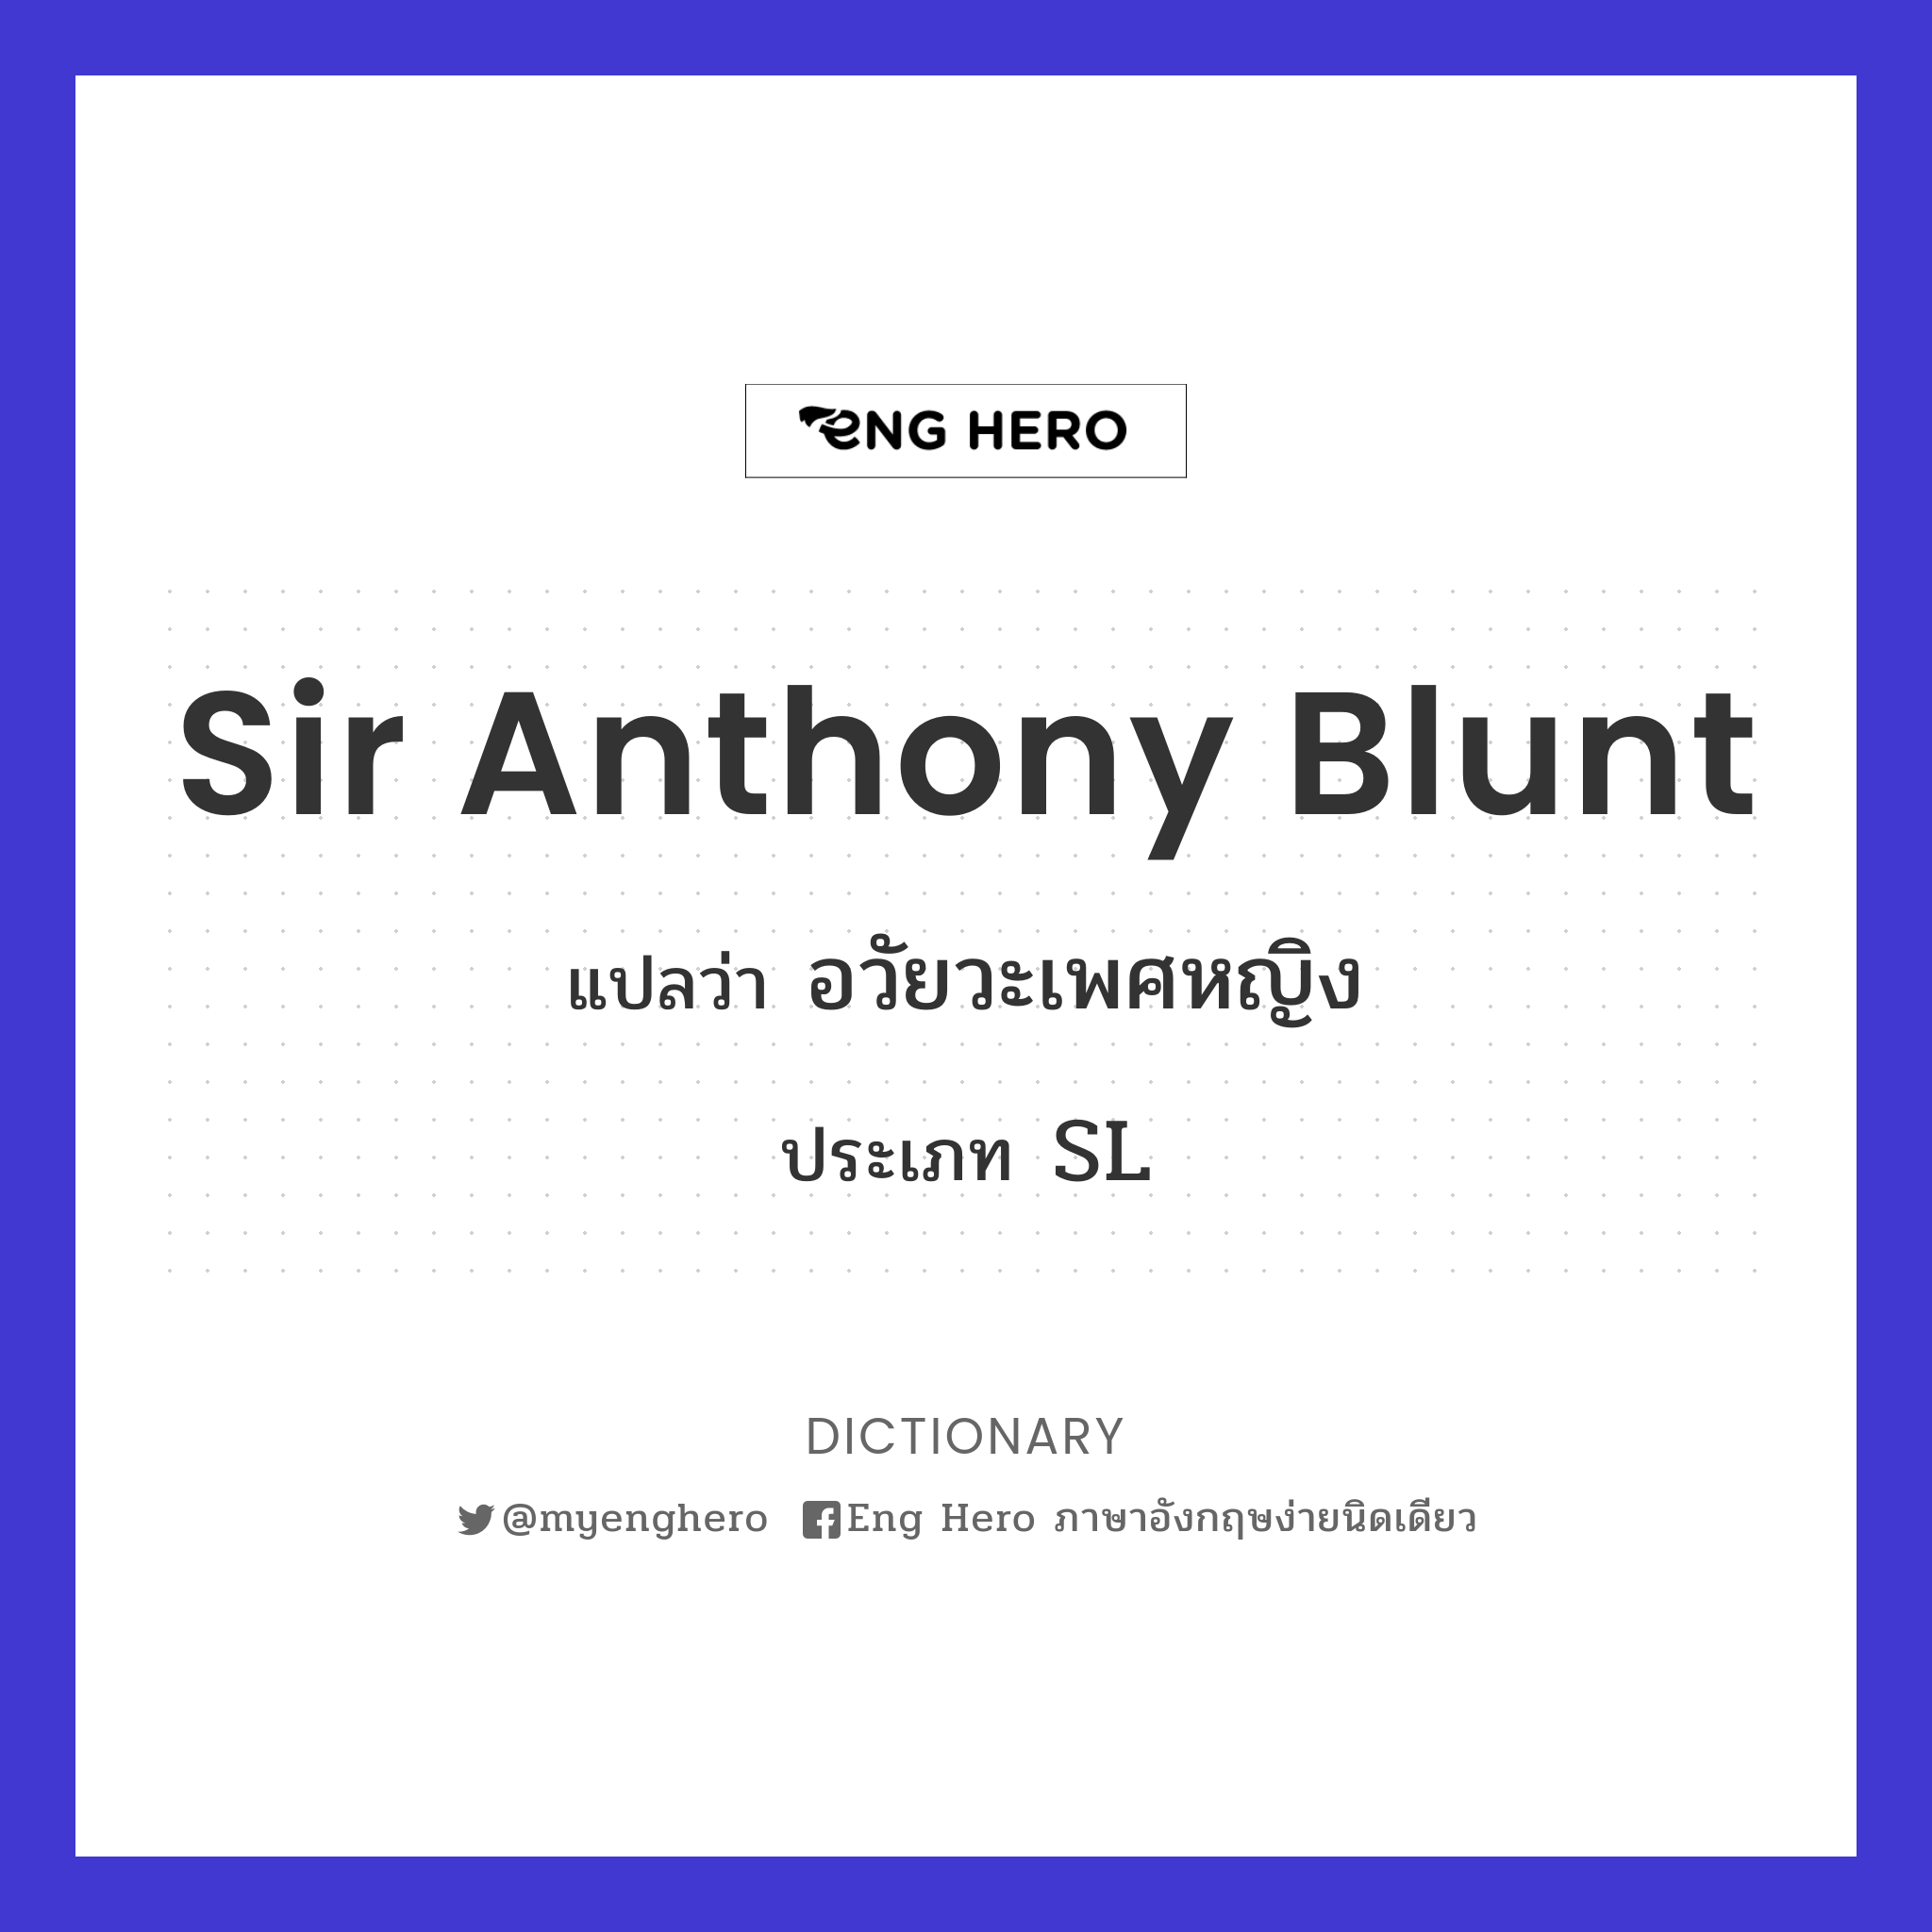 Sir Anthony Blunt